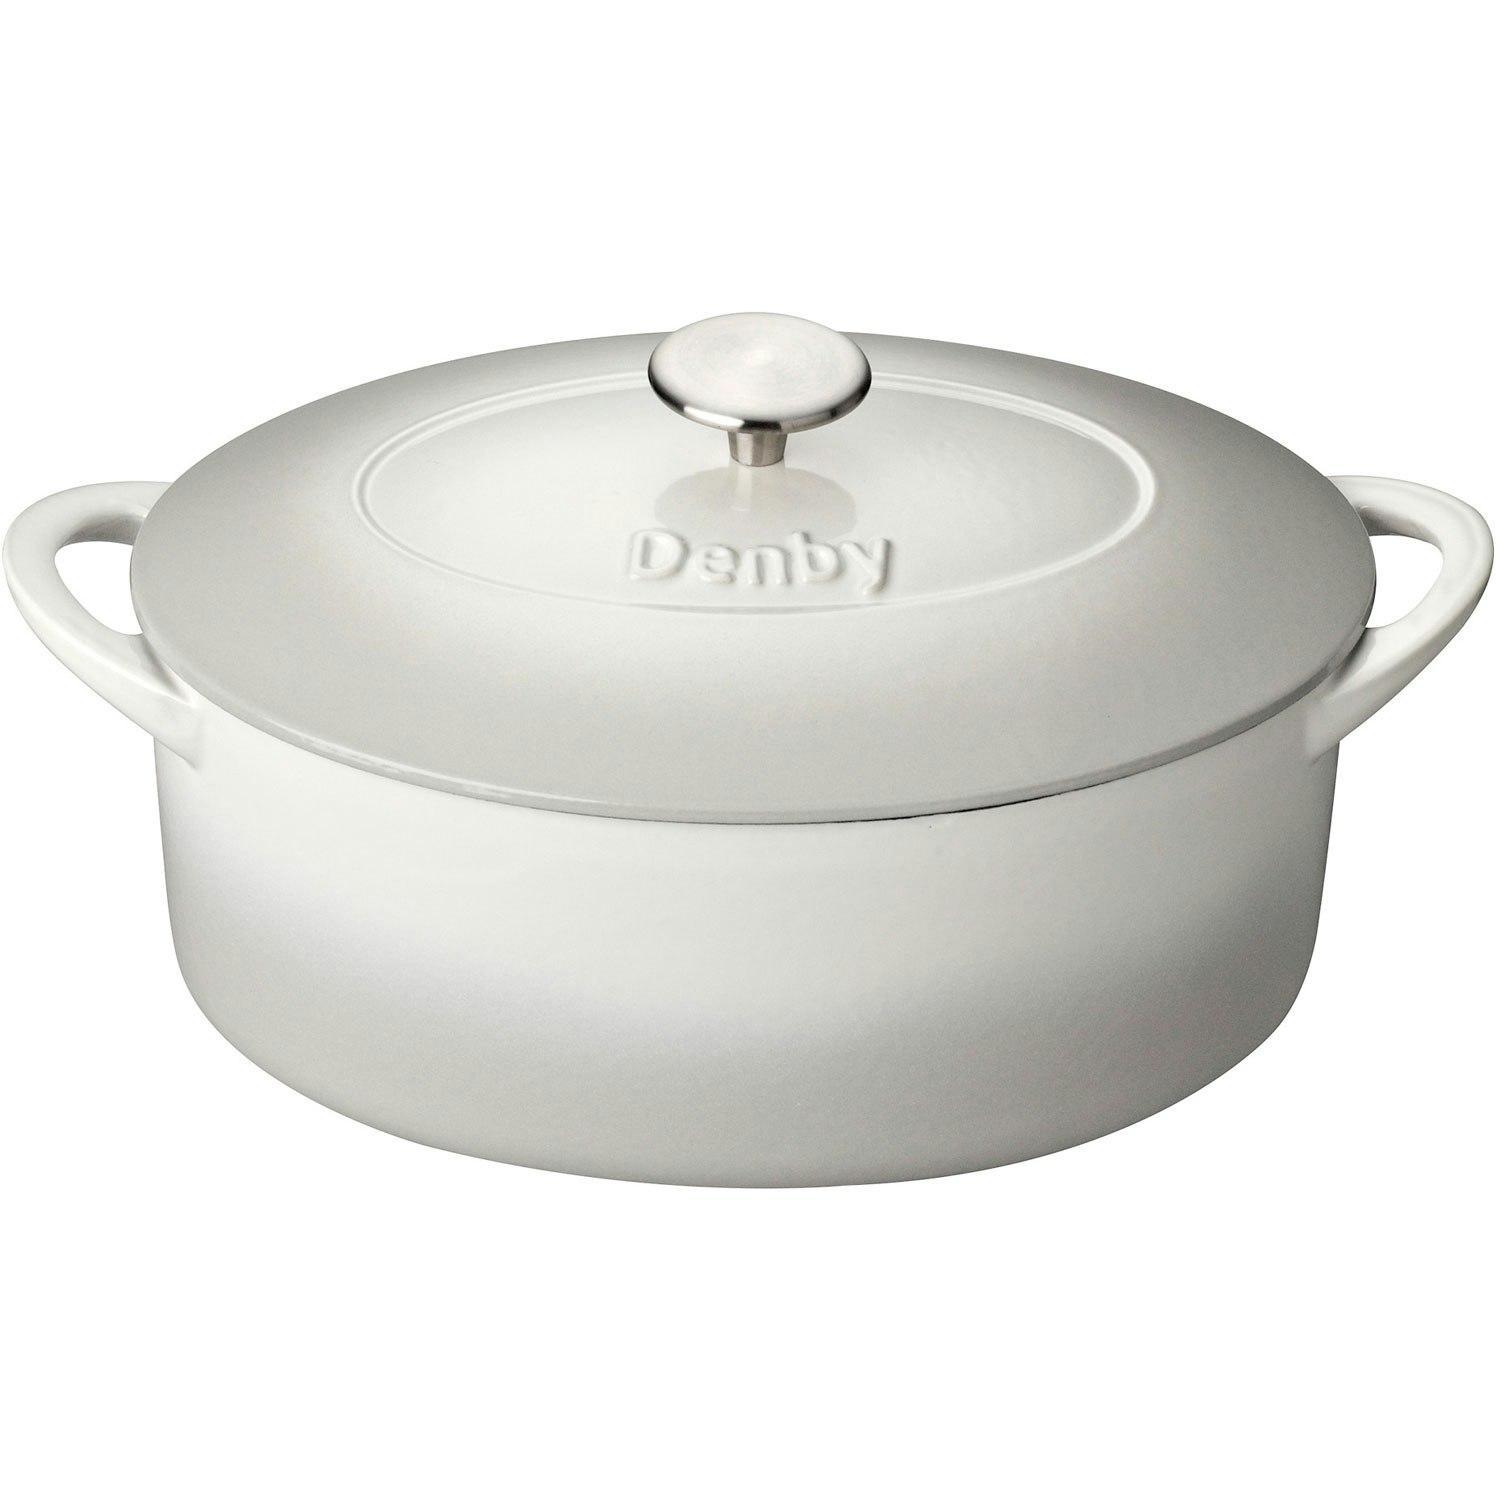 https://royaldesign.com/image/2/denby-cast-iron-28cm-oval-casserole-10